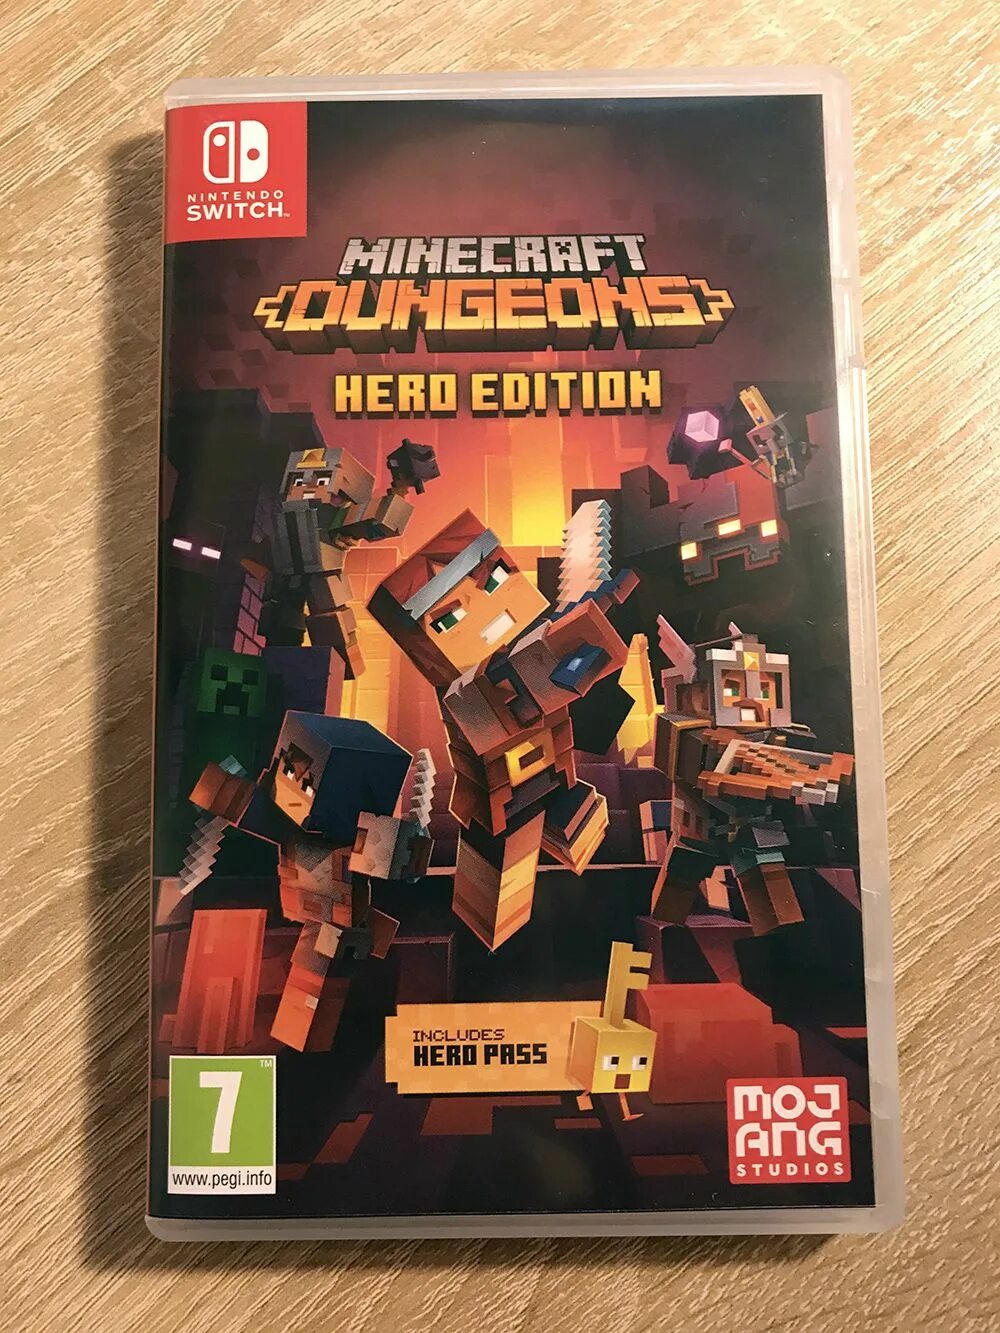 Игра на Нинтендо свитч Minecraft Dungeons. Nintendo Switch картридж майнкрафт. Minecraft Dungeons Hero Edition картриджи Нинтендо. Minecraft Dungeons Hero Edition (Nintendo Switch) обложка.